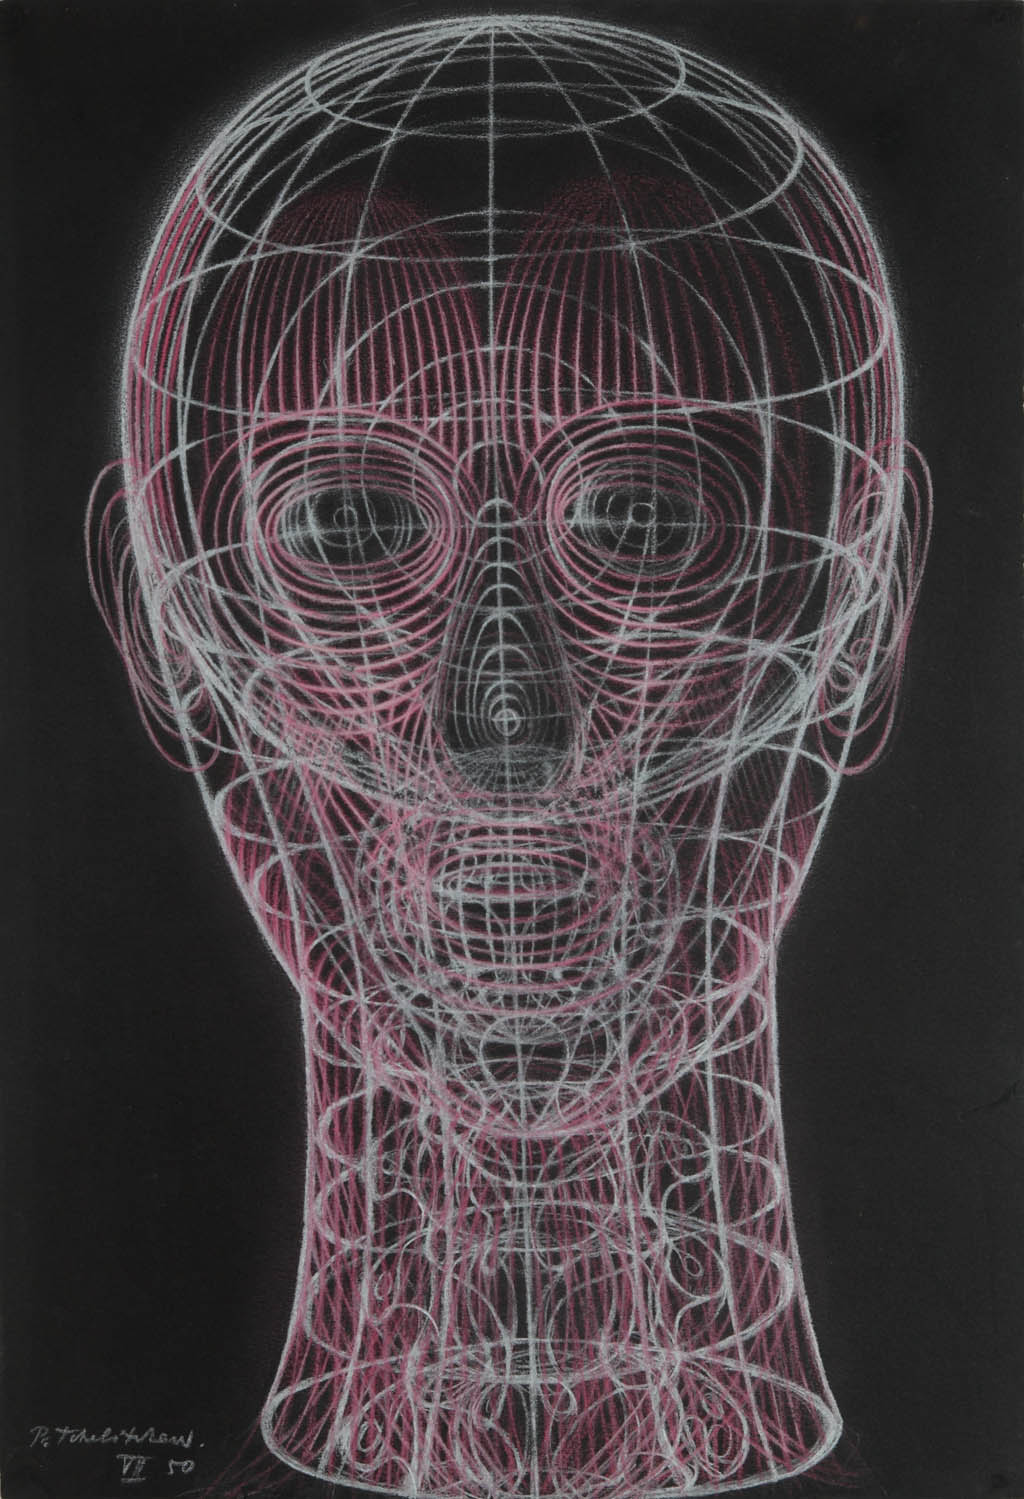 Pavel Tchelitchew - Spiral Head - 1950 gouache on black paper